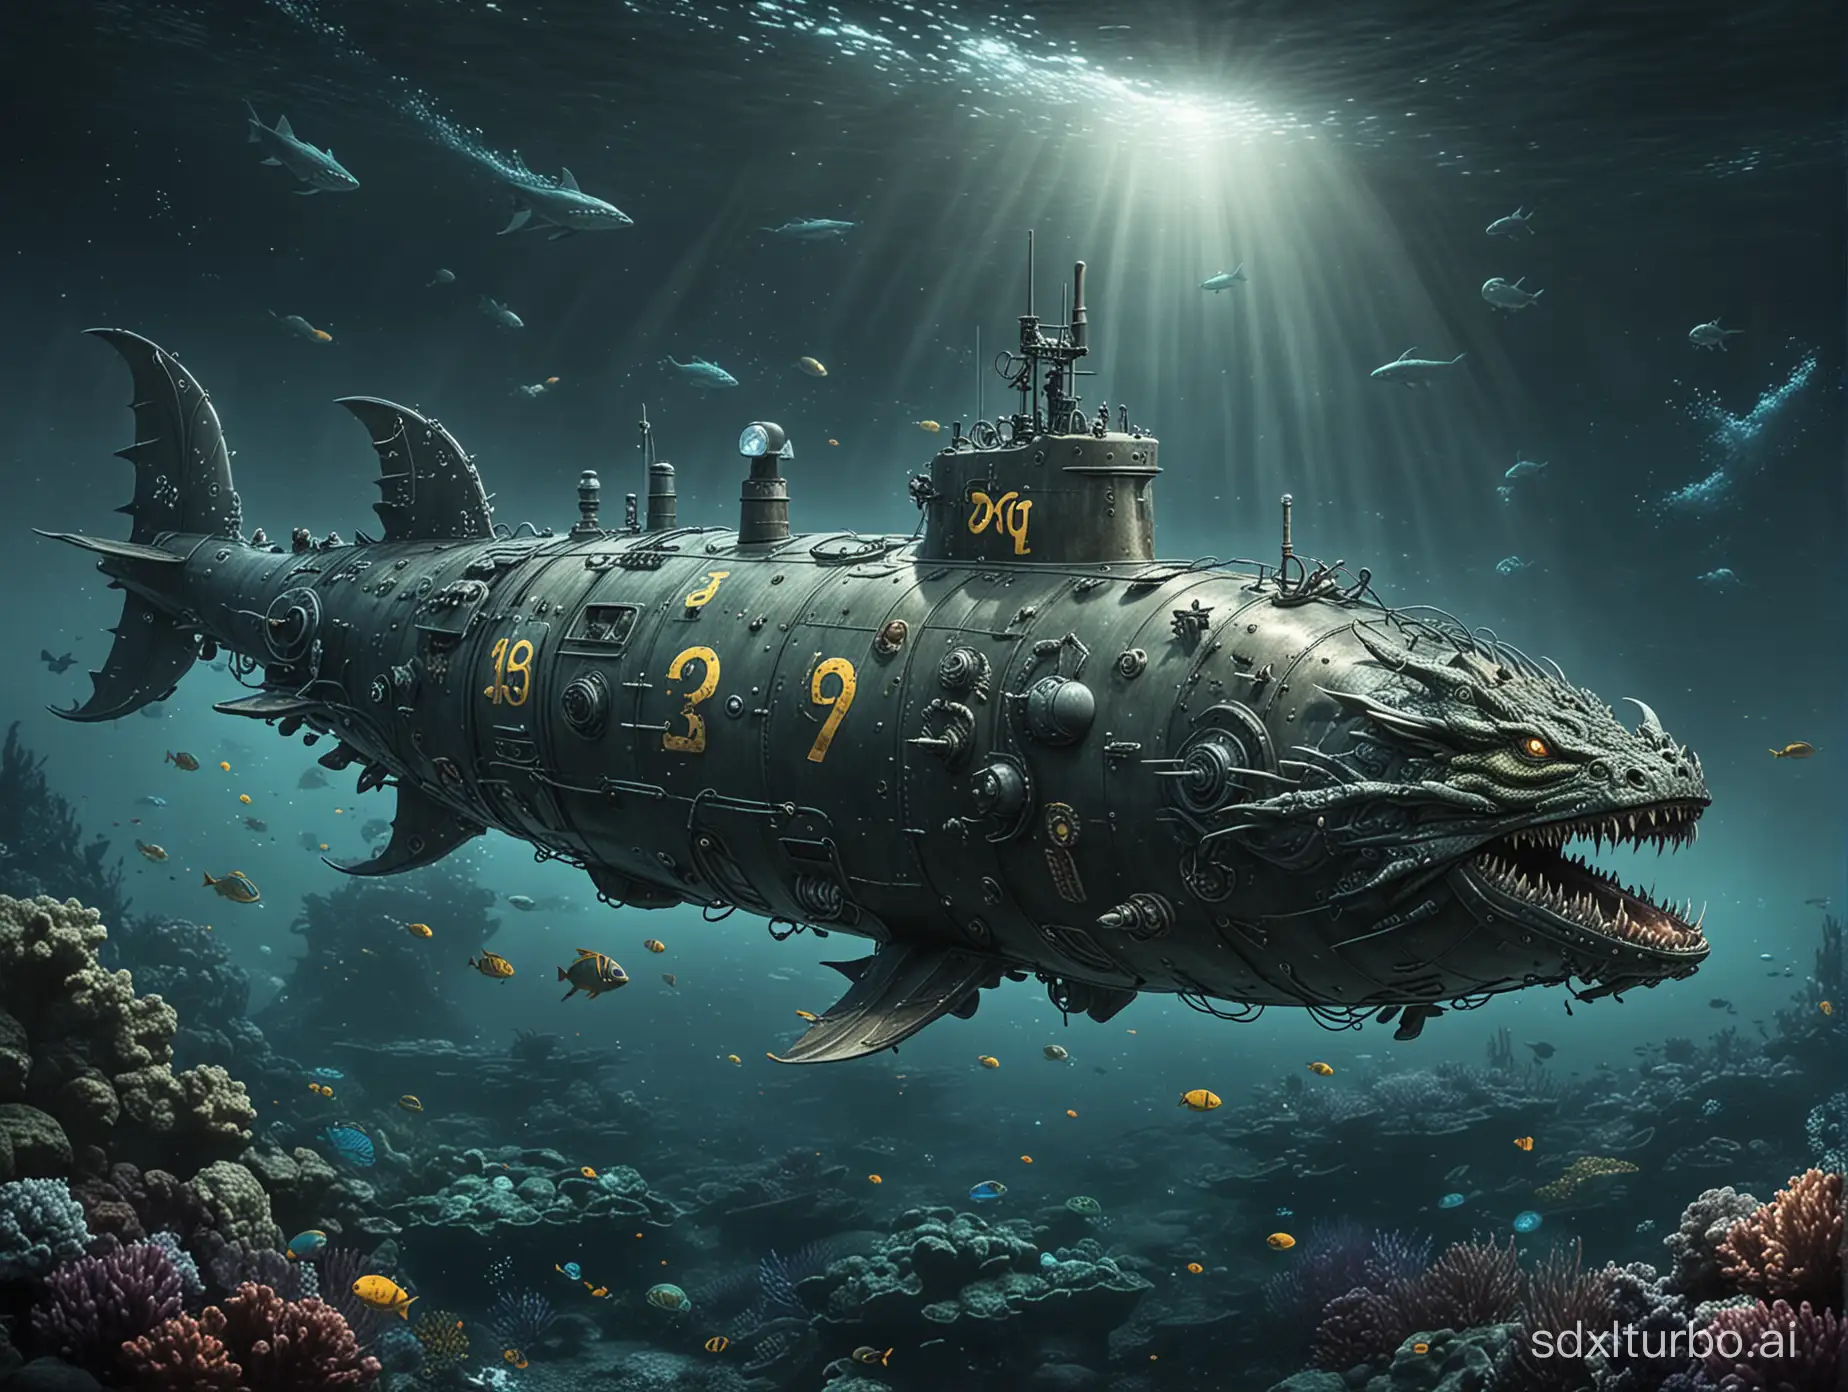 Underwater-Adventure-Dragon-Submarine-Expedition